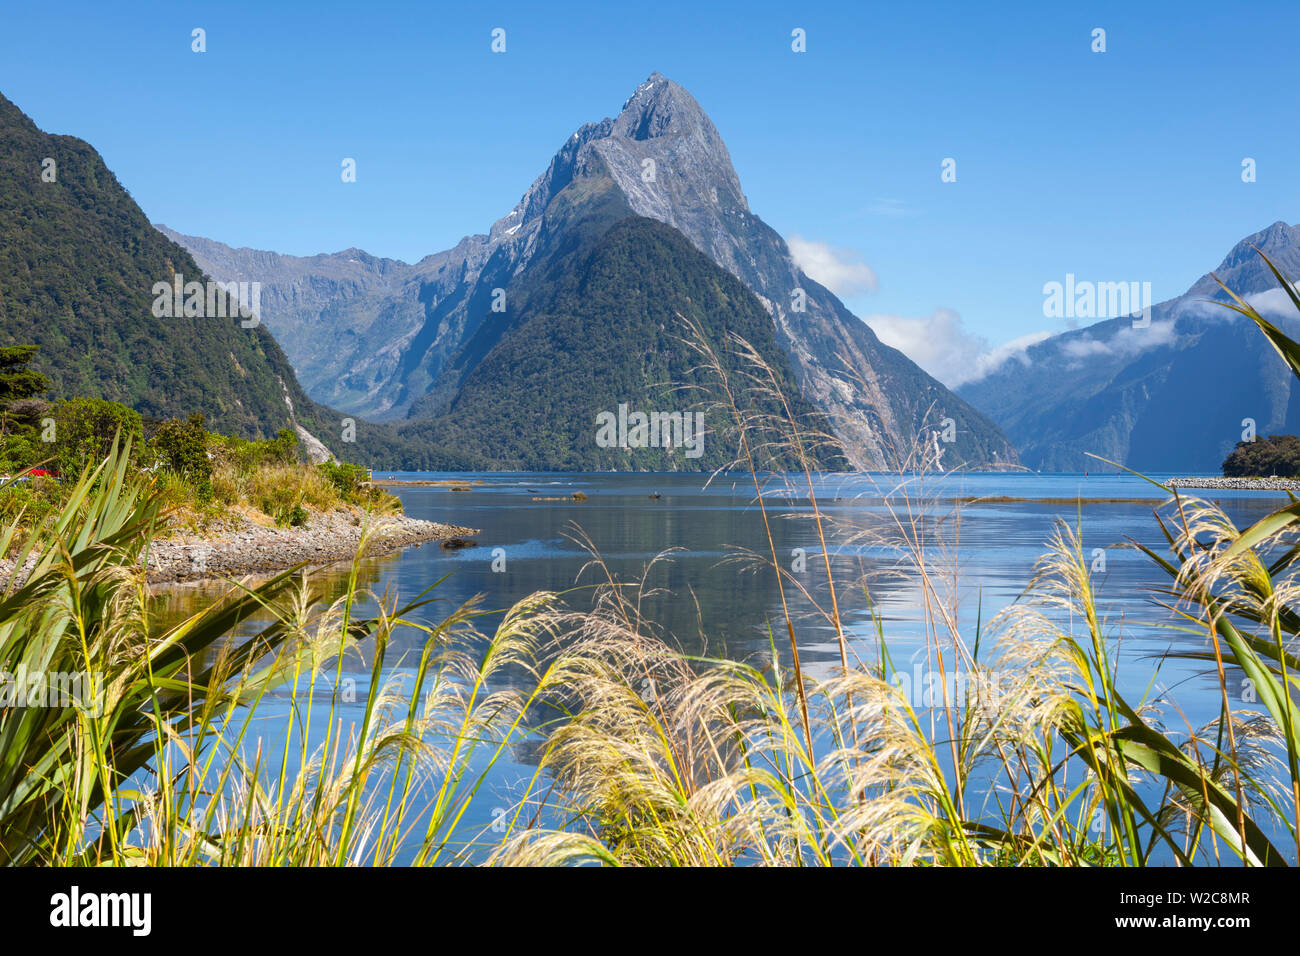 Mitre Peak, Milford Sound, Fiordland National Park, South Island, New Zealand Banque D'Images